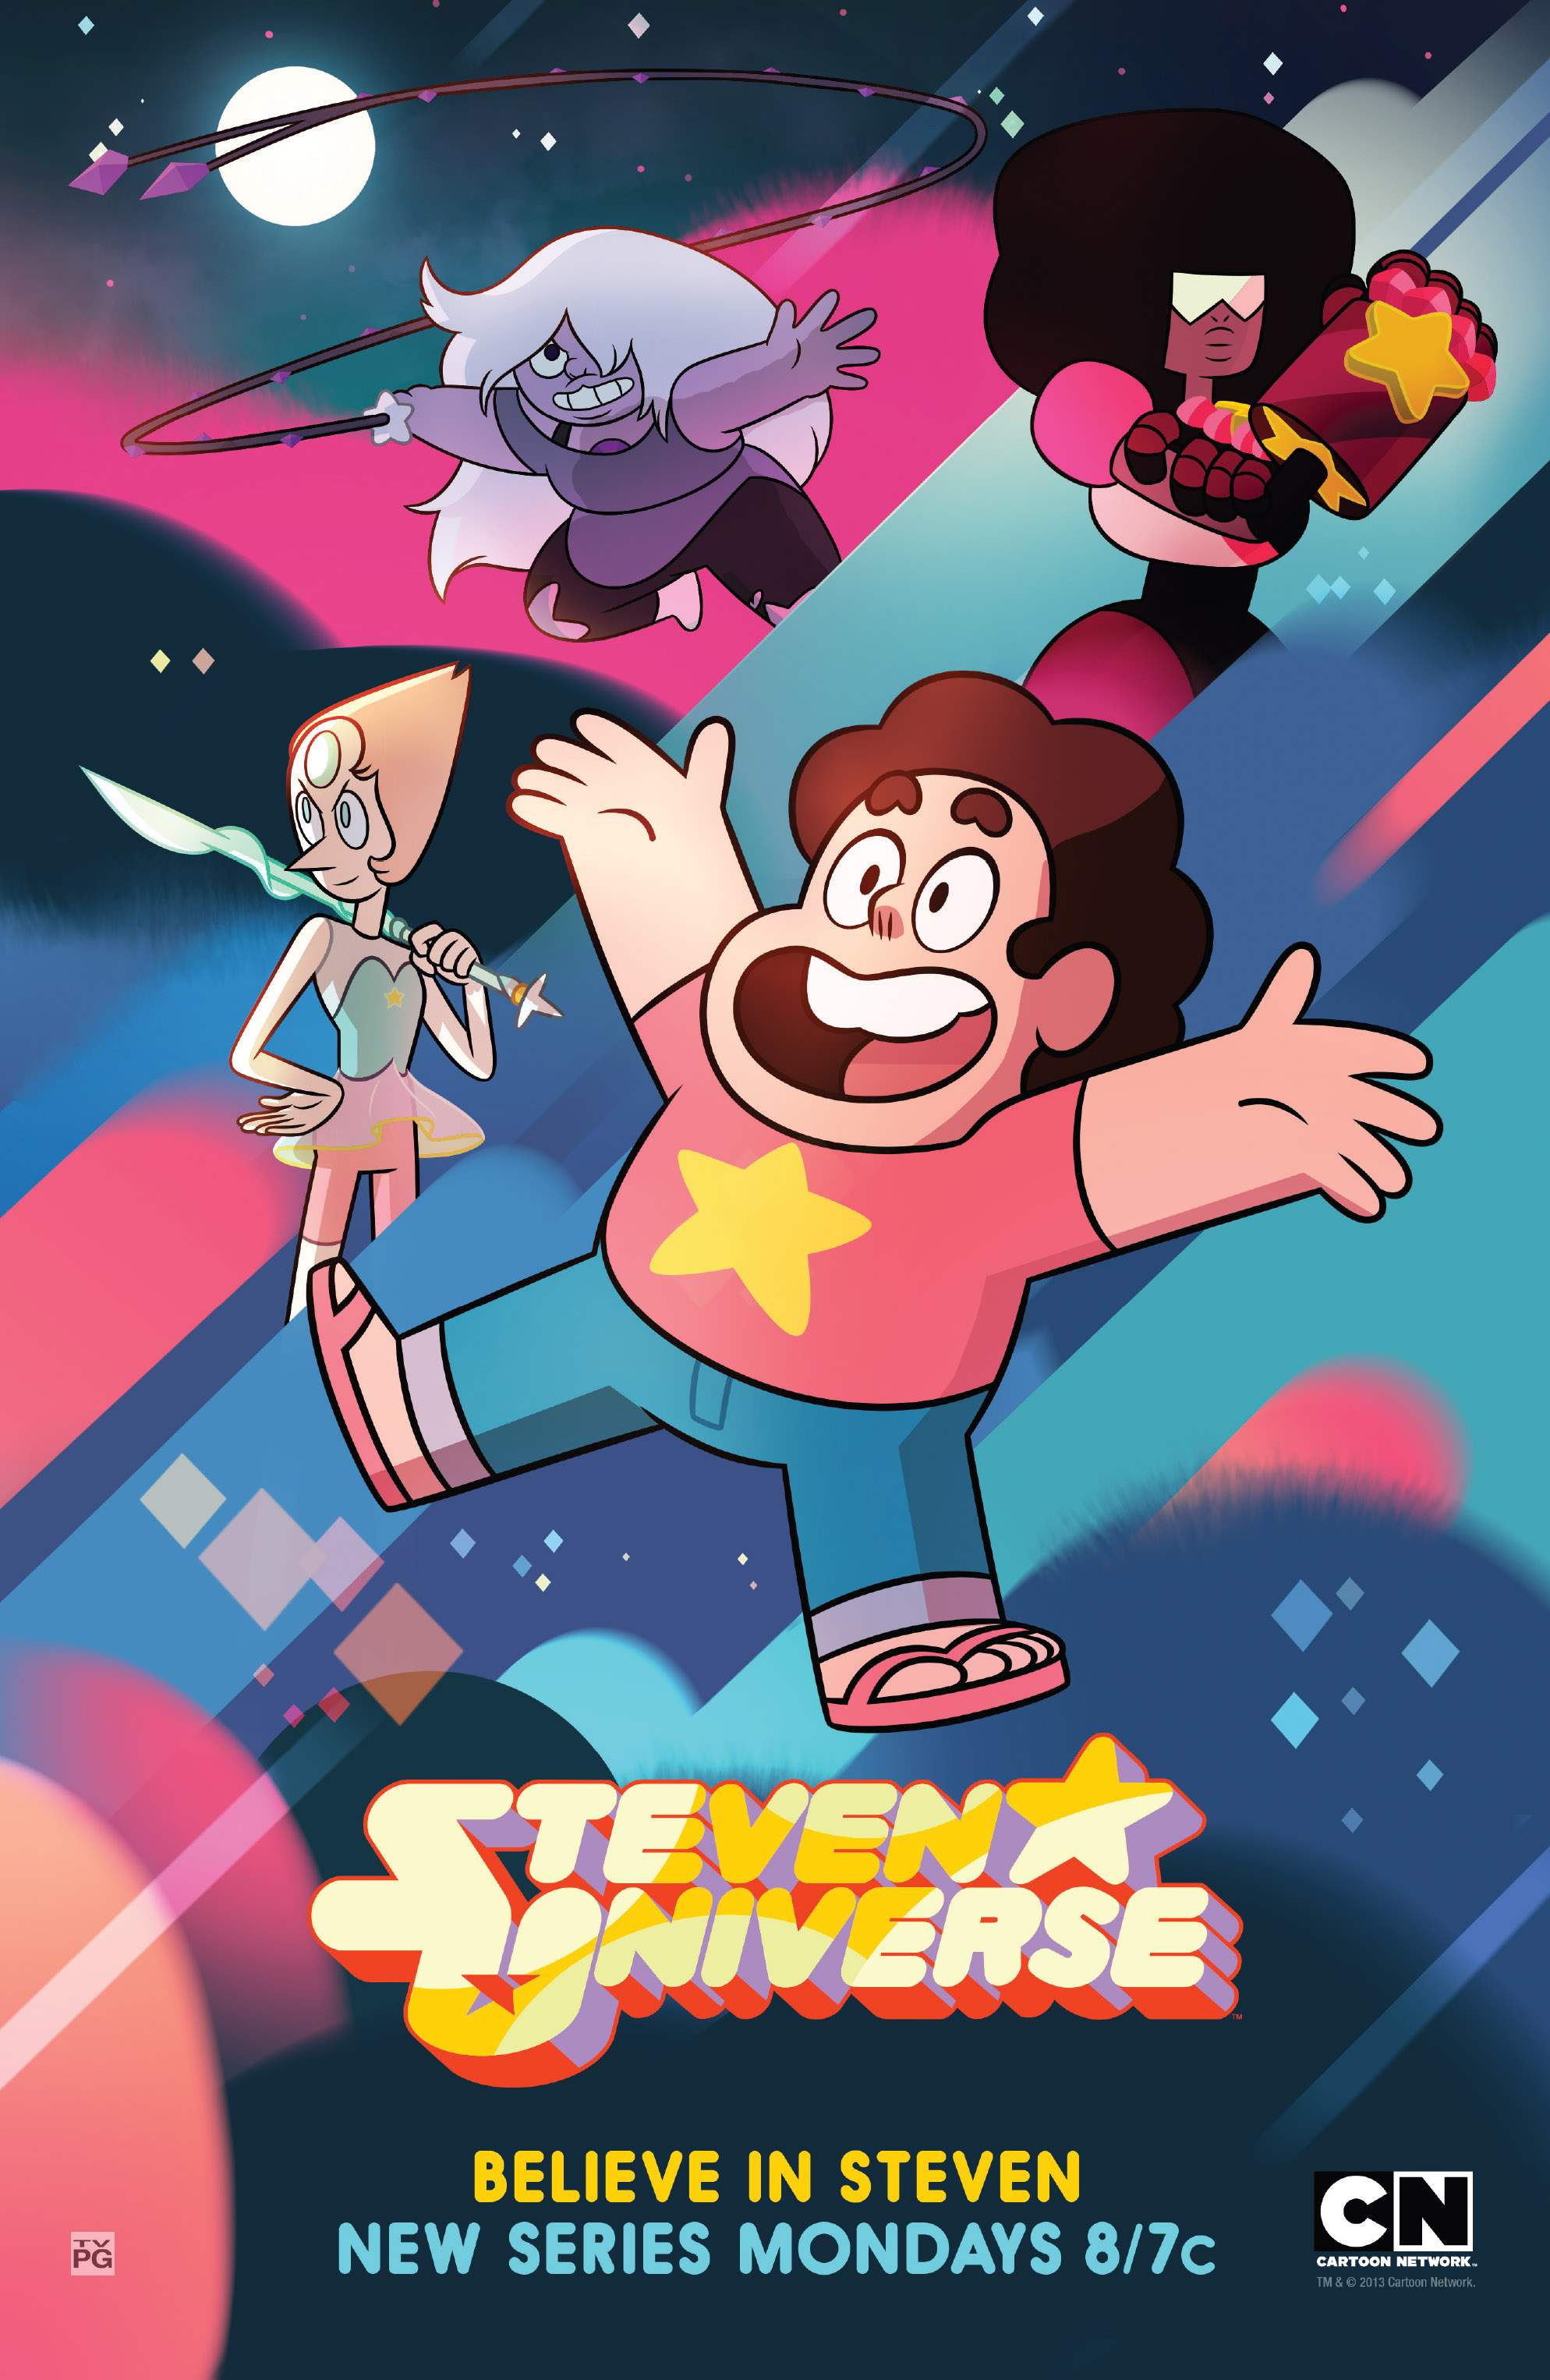 Steven Universo  tudo sobre filmes e series